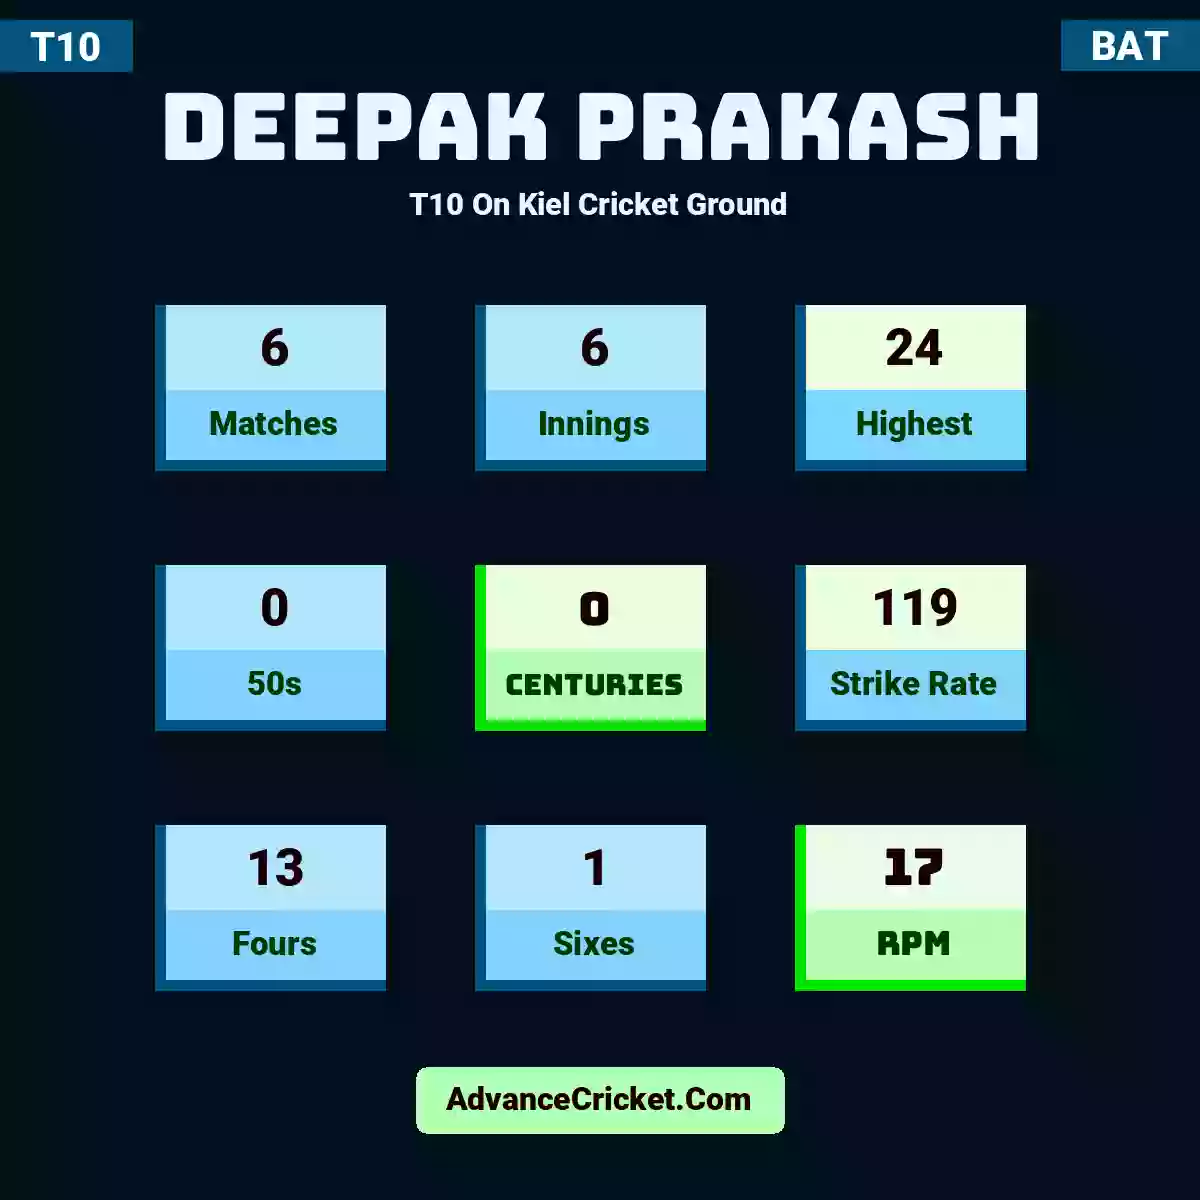 Deepak prakash T10  On Kiel Cricket Ground, Deepak prakash played 6 matches, scored 24 runs as highest, 0 half-centuries, and 0 centuries, with a strike rate of 119. D.prakash hit 13 fours and 1 sixes, with an RPM of 17.